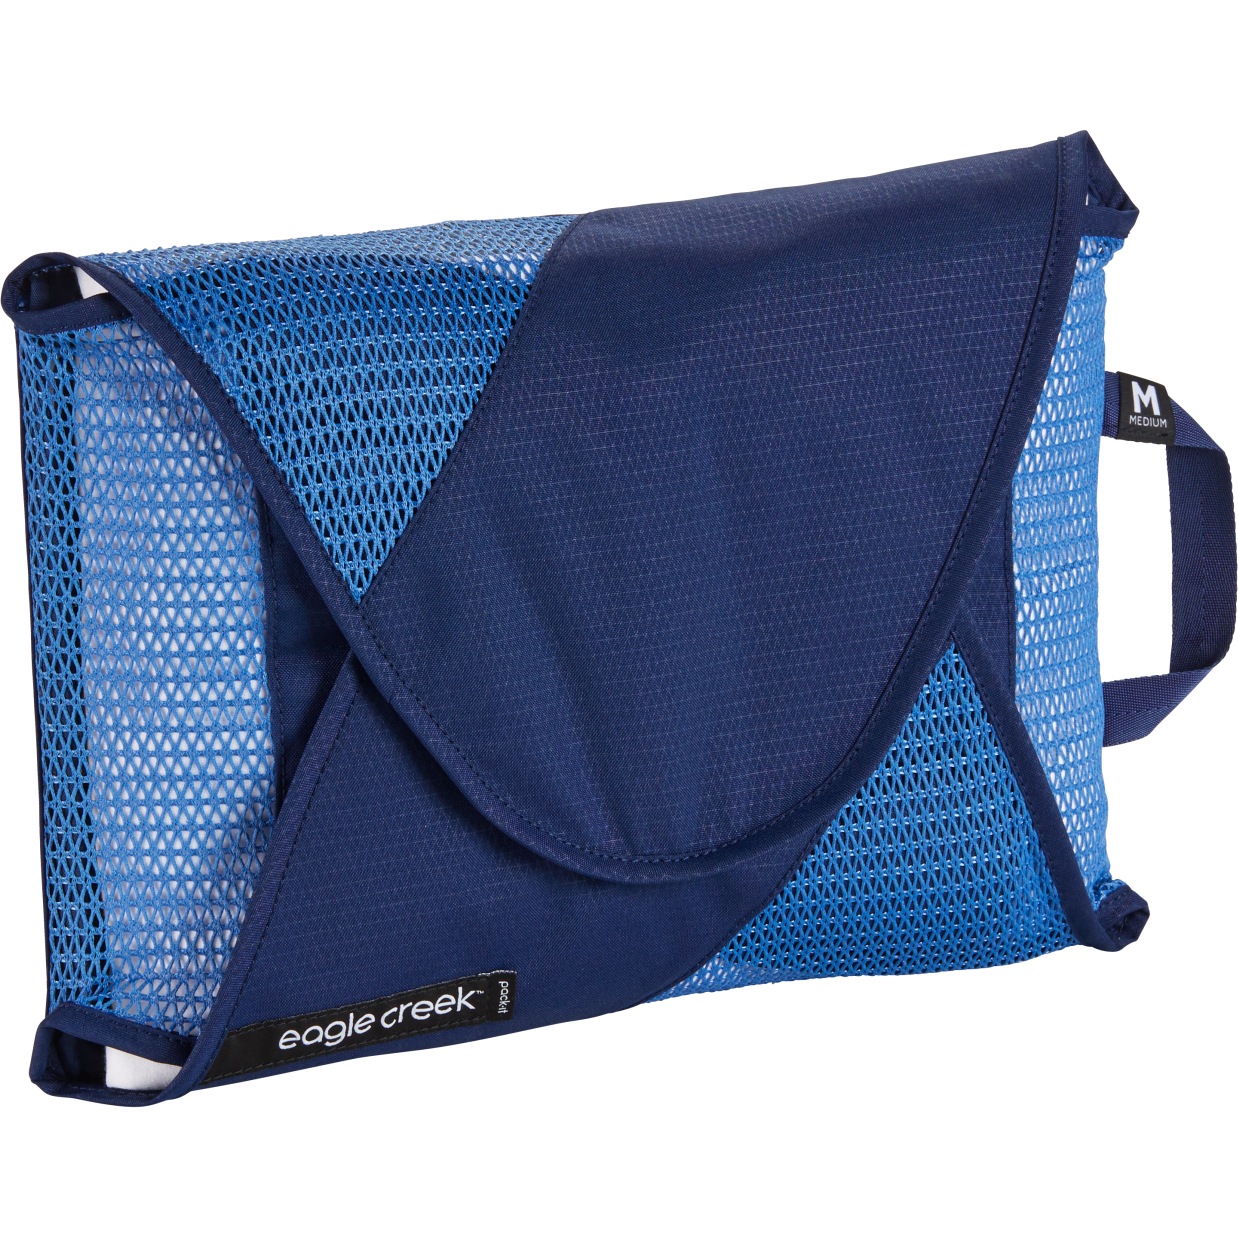 Productfoto van Eagle Creek Pack-It™ Reveal Garment Folder M - Tas Organizer - aizome blue grey